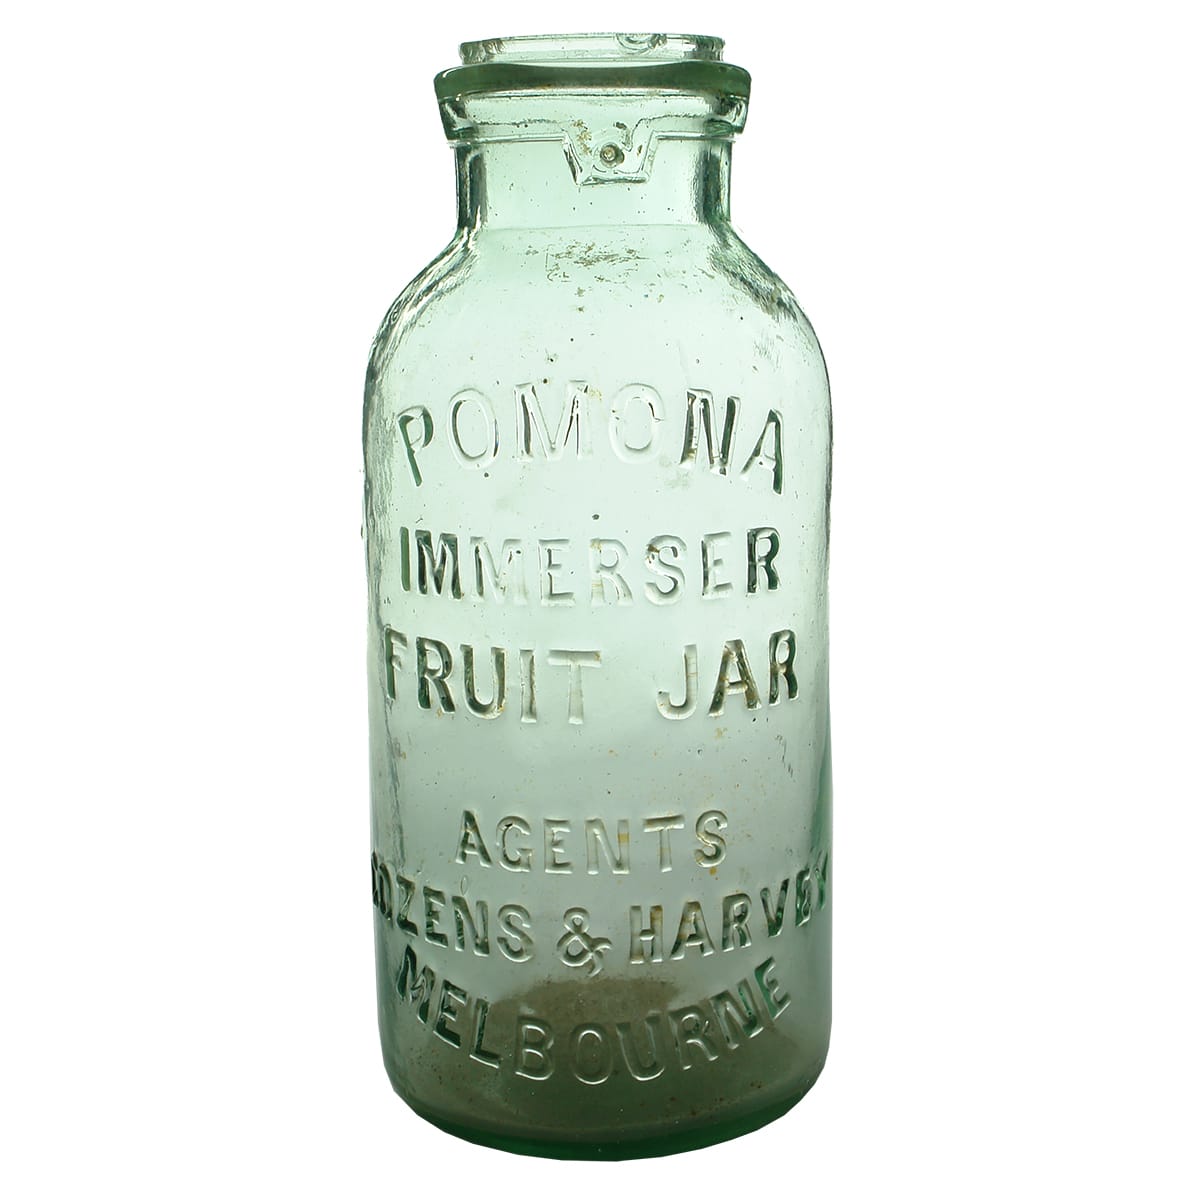 Fruit Jar. Cozens & Harvey Melbourne Pomona Immerser. Half Gallon.